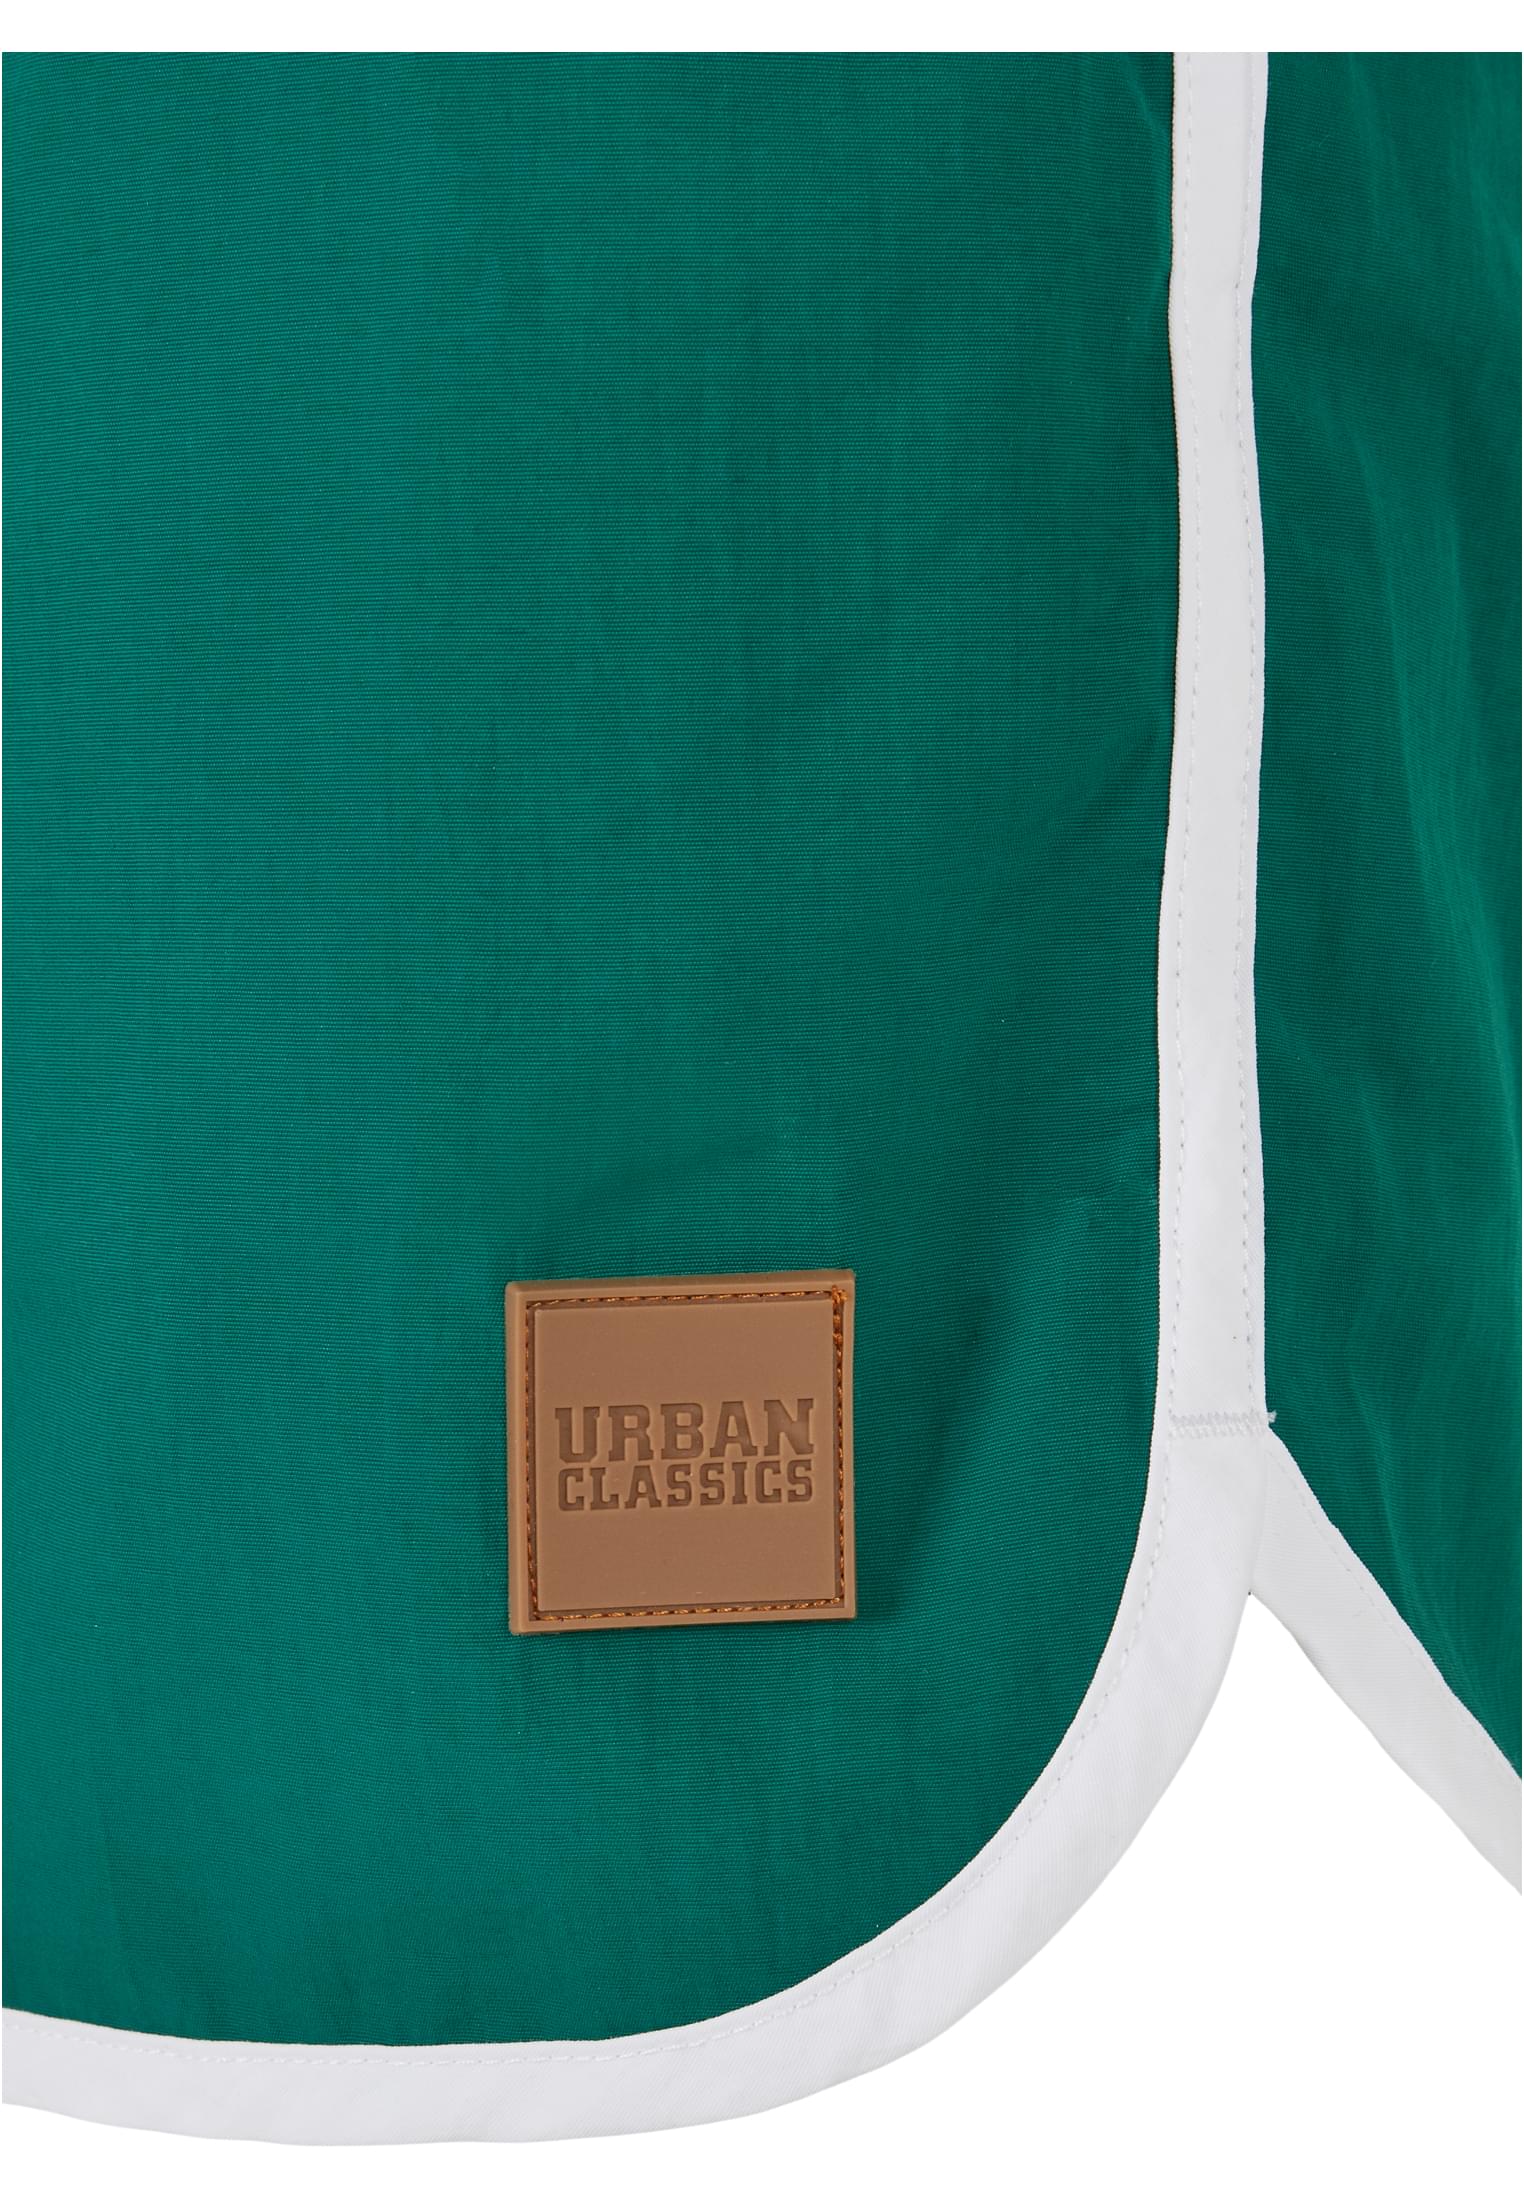 Plus Size Retro Swimshorts in Farbe white/green